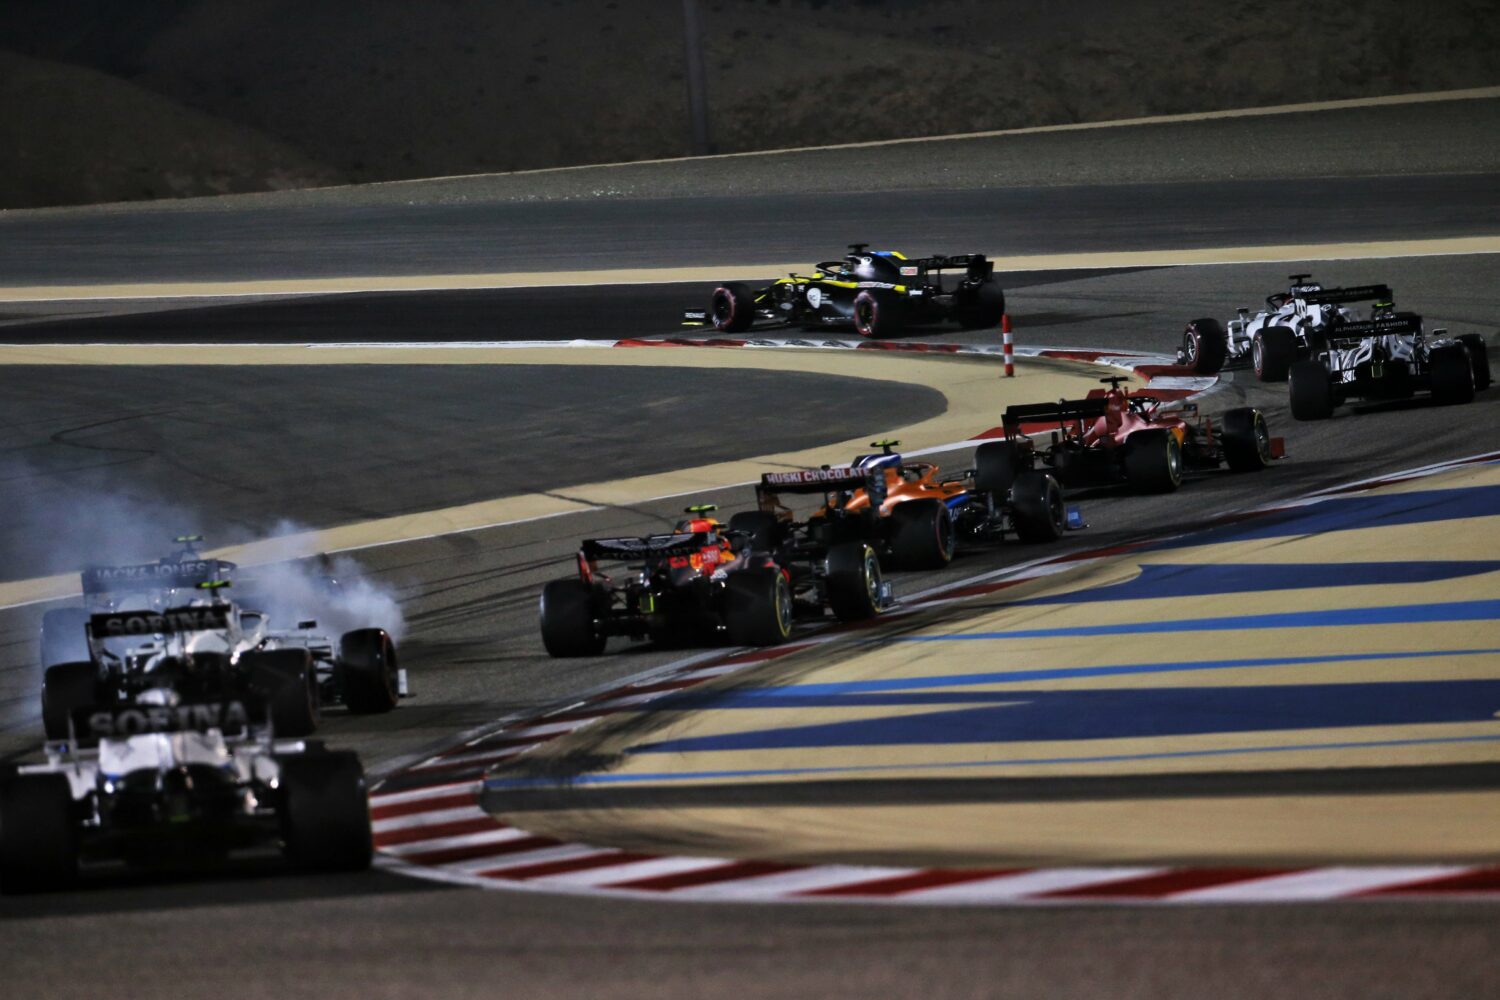 17-Grand Prix de Formule 1 de Sakhir 2020.jpeg